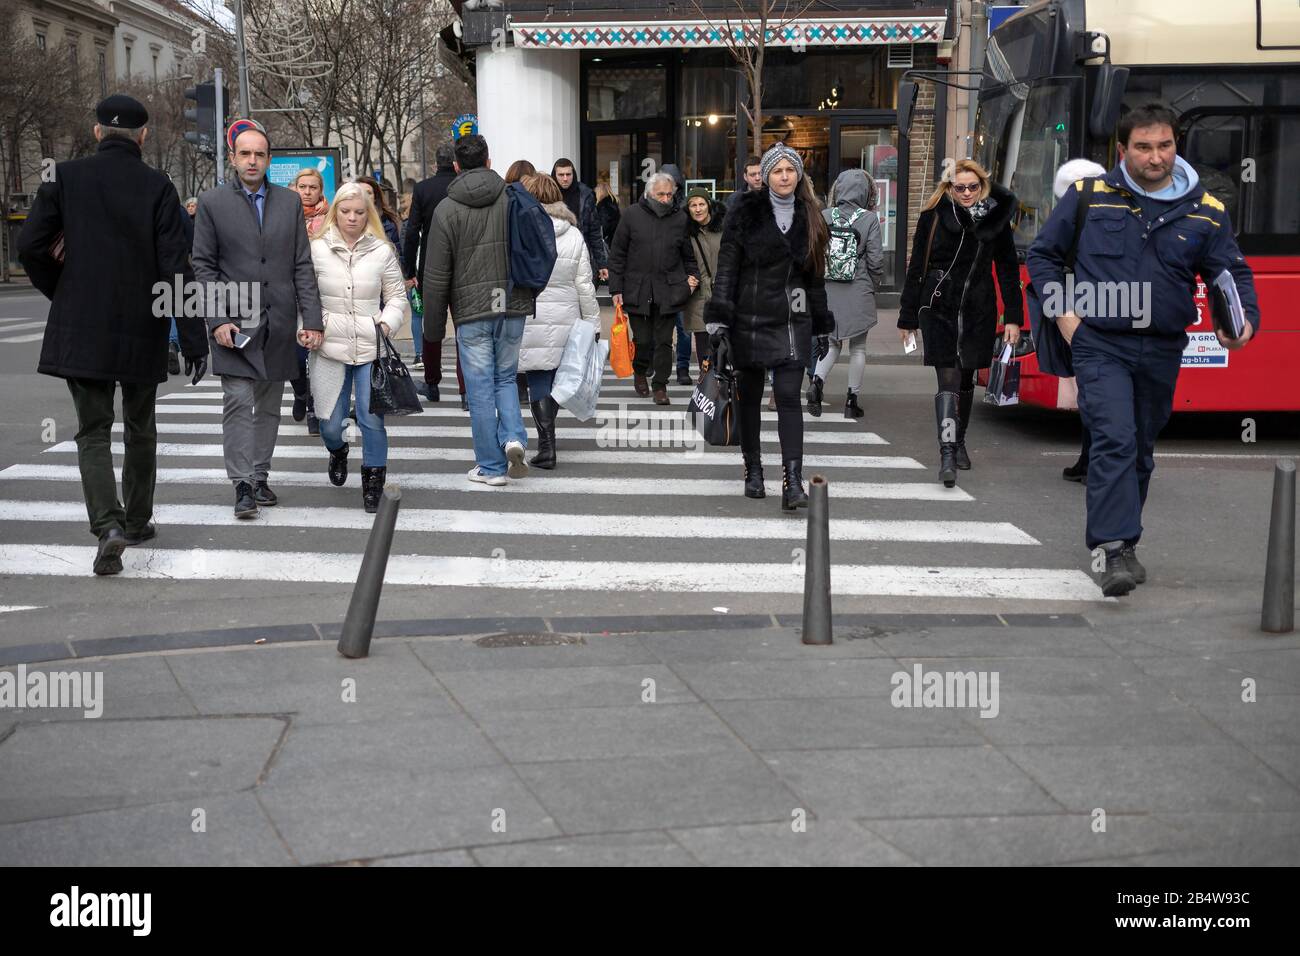 Serbia, Feb 7, 2020: Pedestrians crossing Makedonska Street in the city center of Belgrade Stock Photo